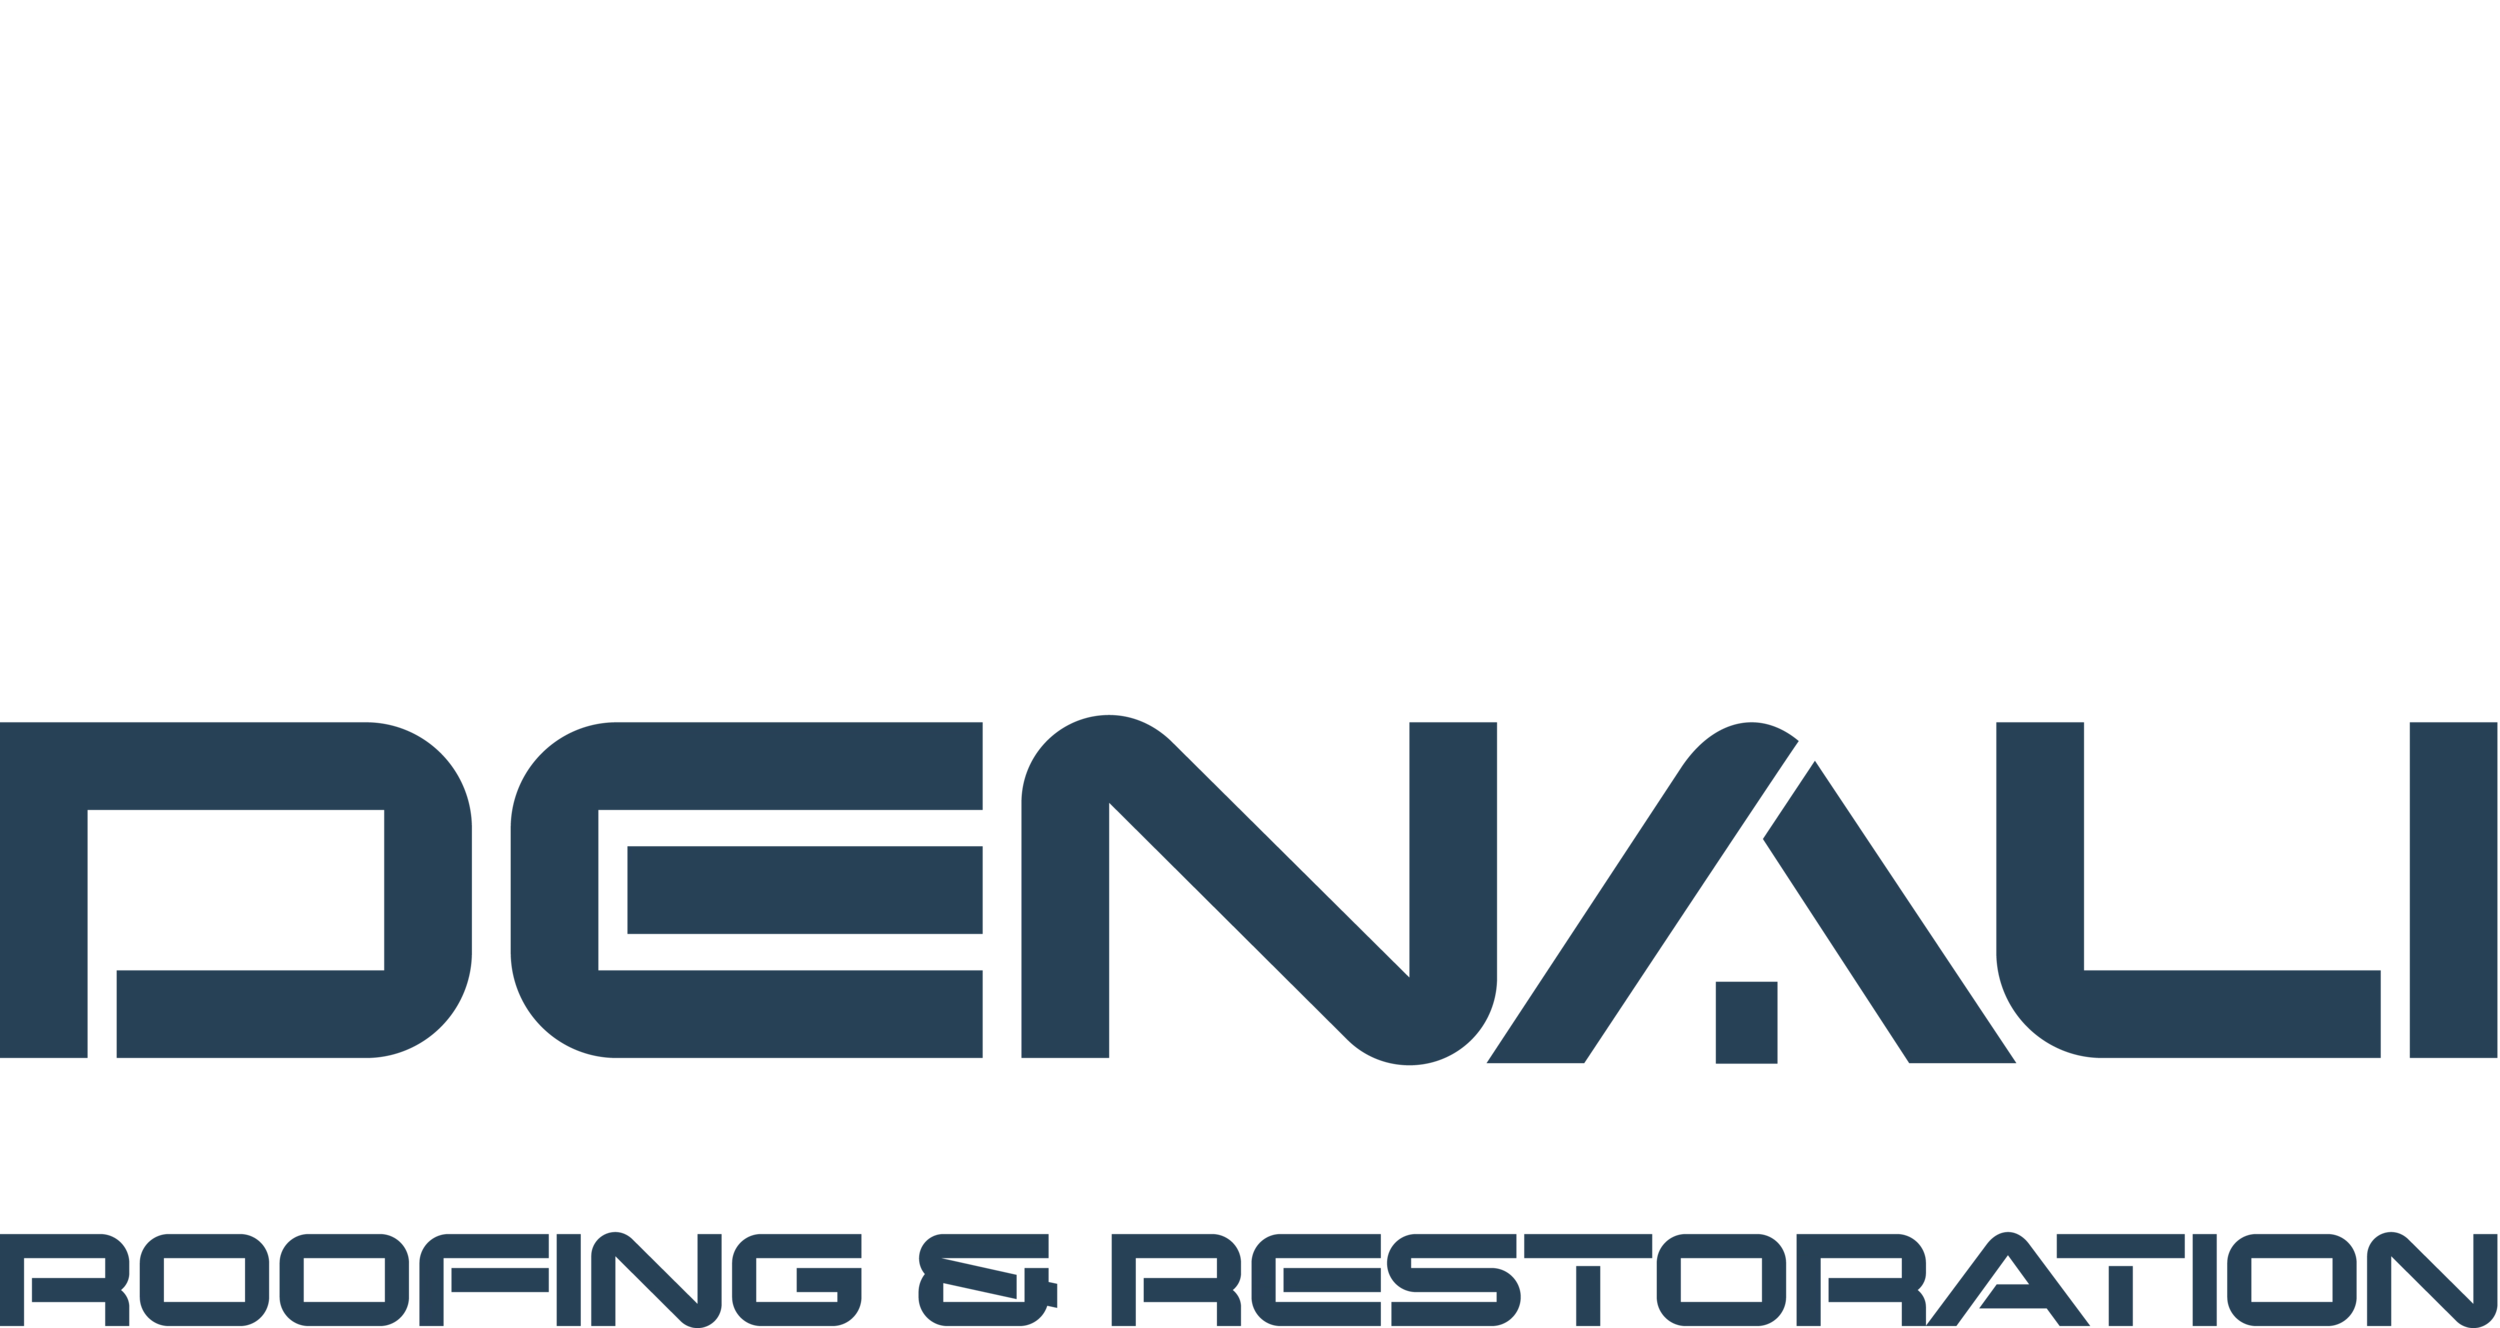 Denali Roofing and Restorations Logo